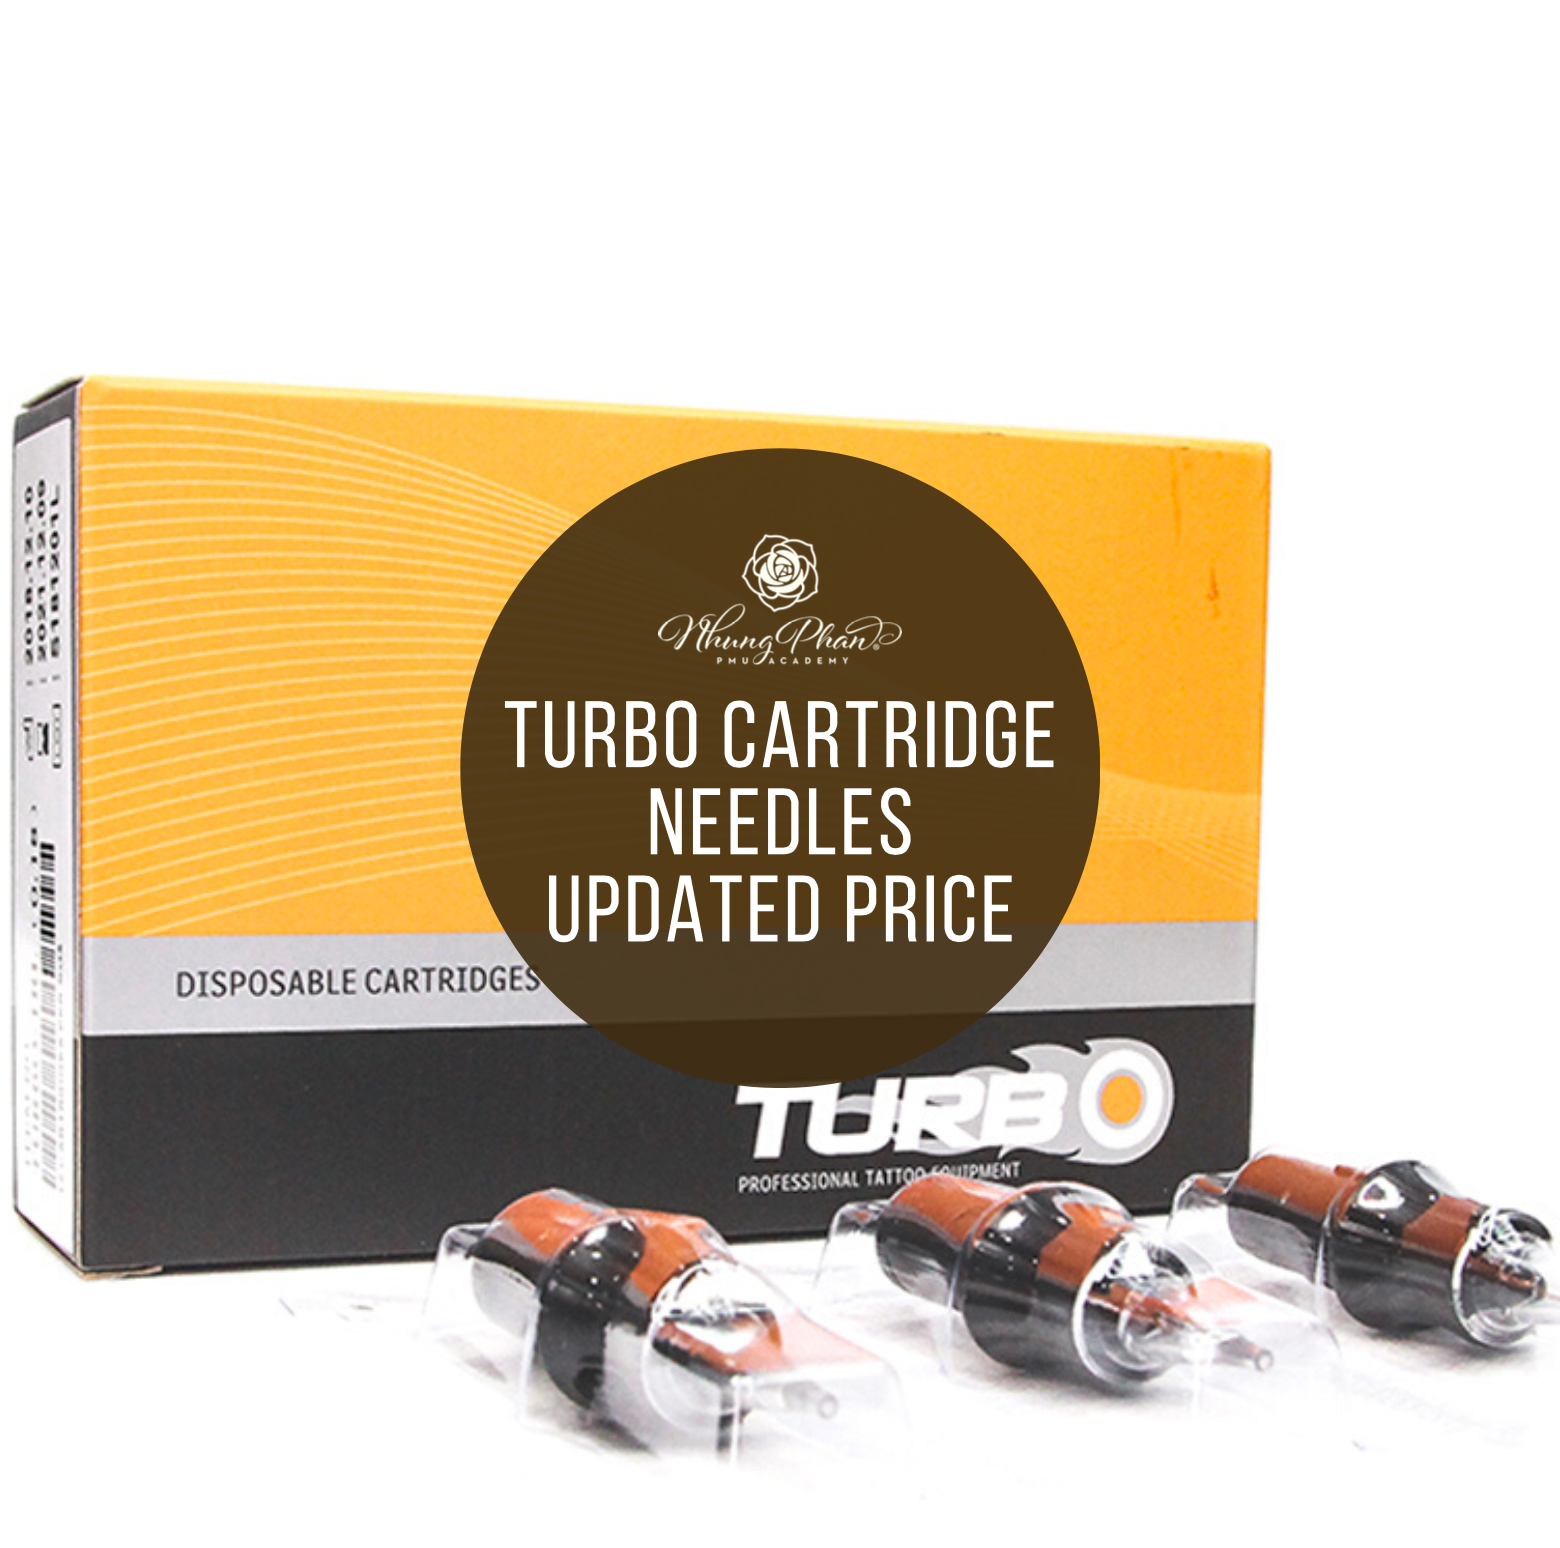 TURBO CARTRIDGE NEEDLES UPDATED PRICE FOR 2020